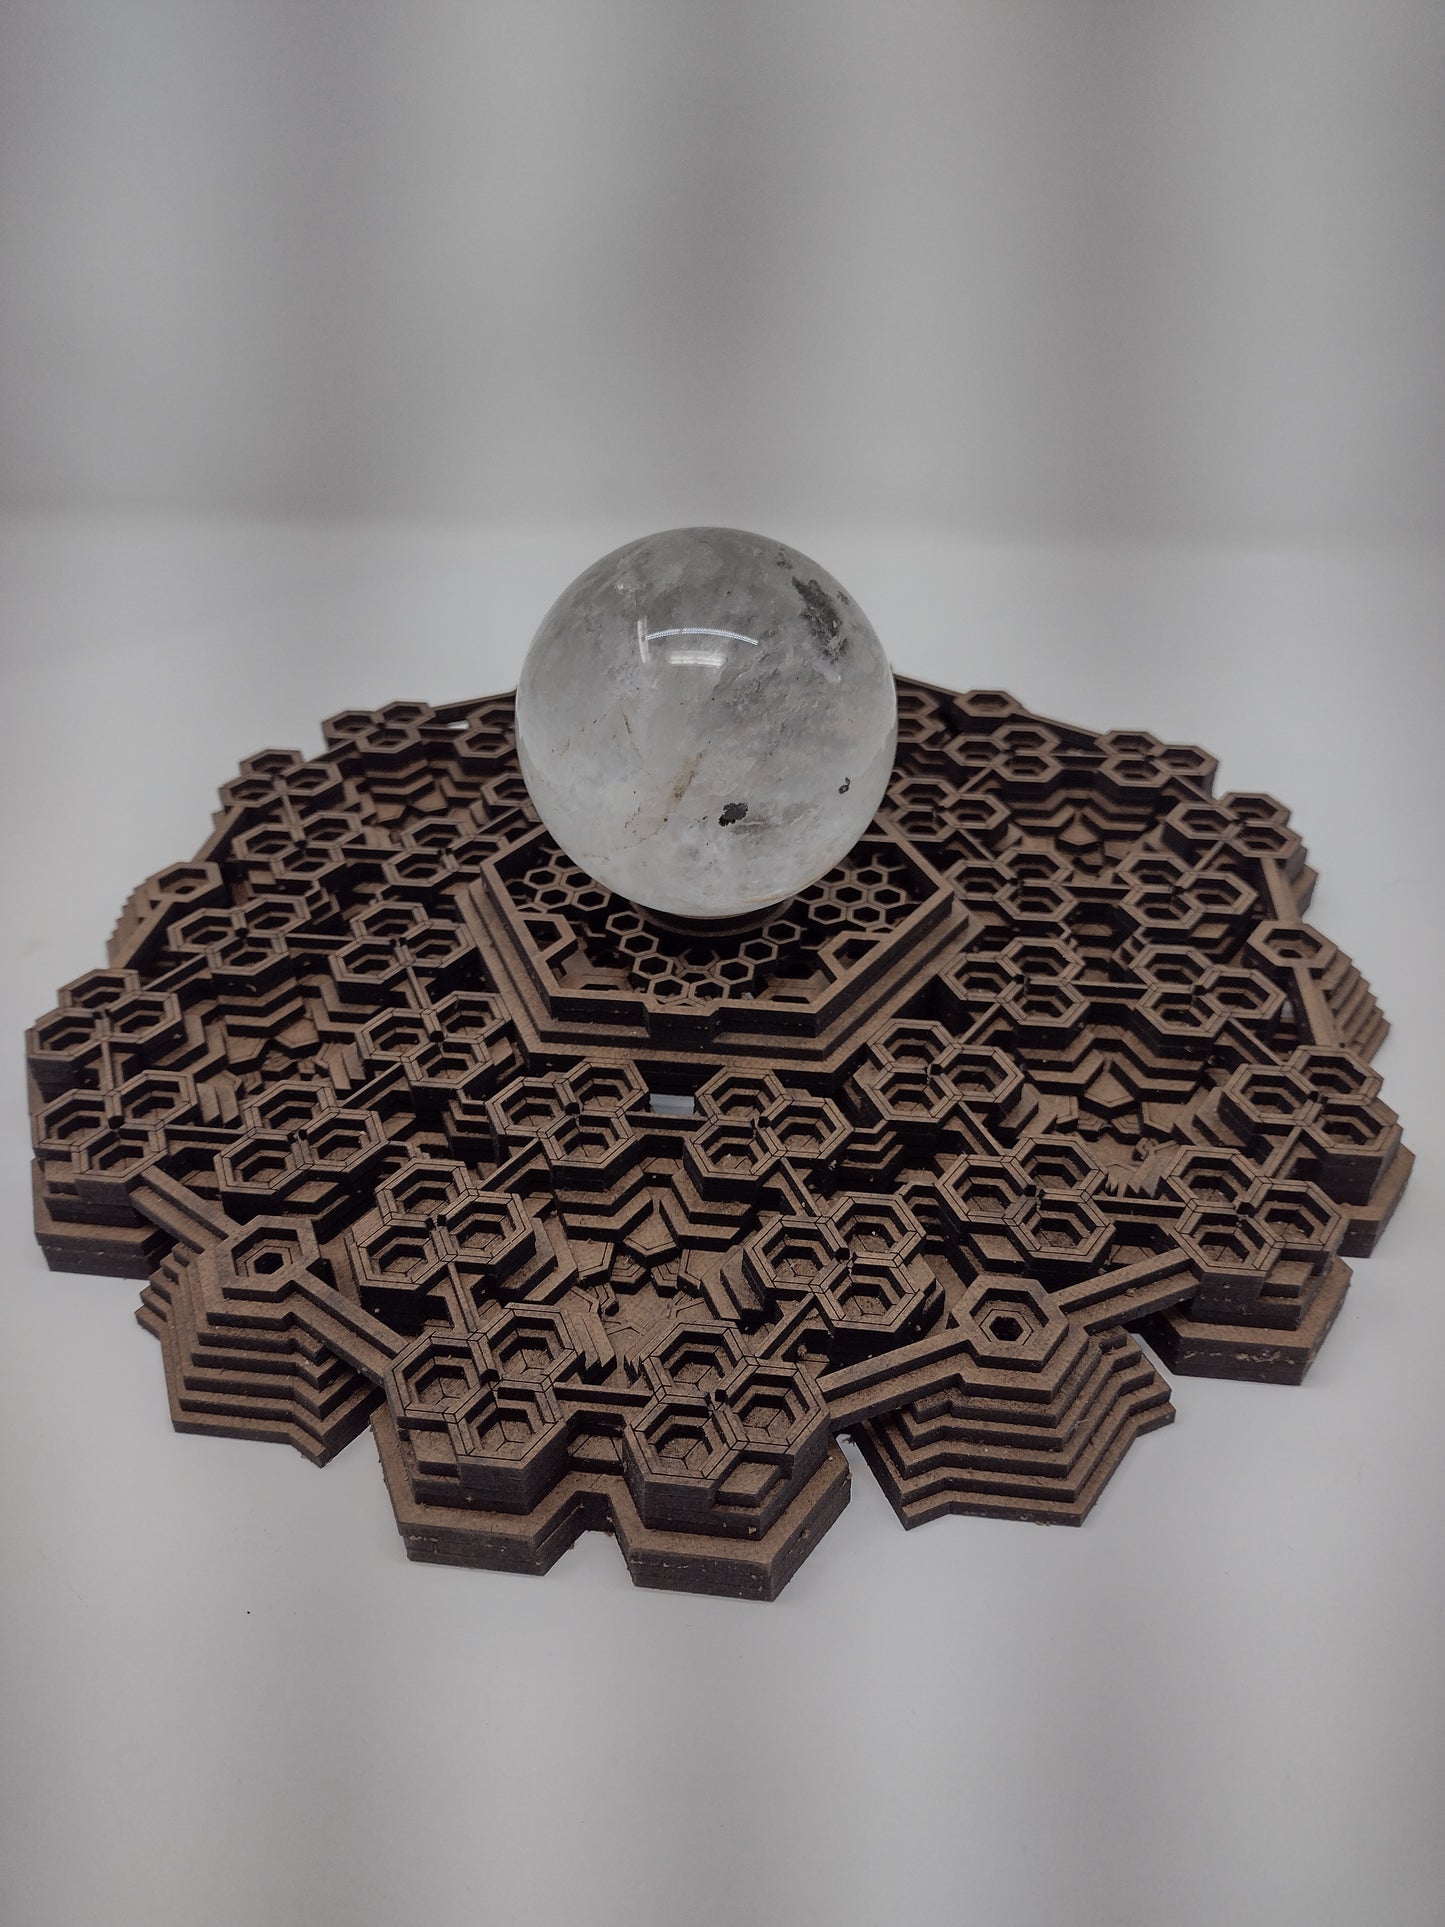 "Fractalgon" Hexagon Wood Laser WALL ART / CRYSTAL GRID